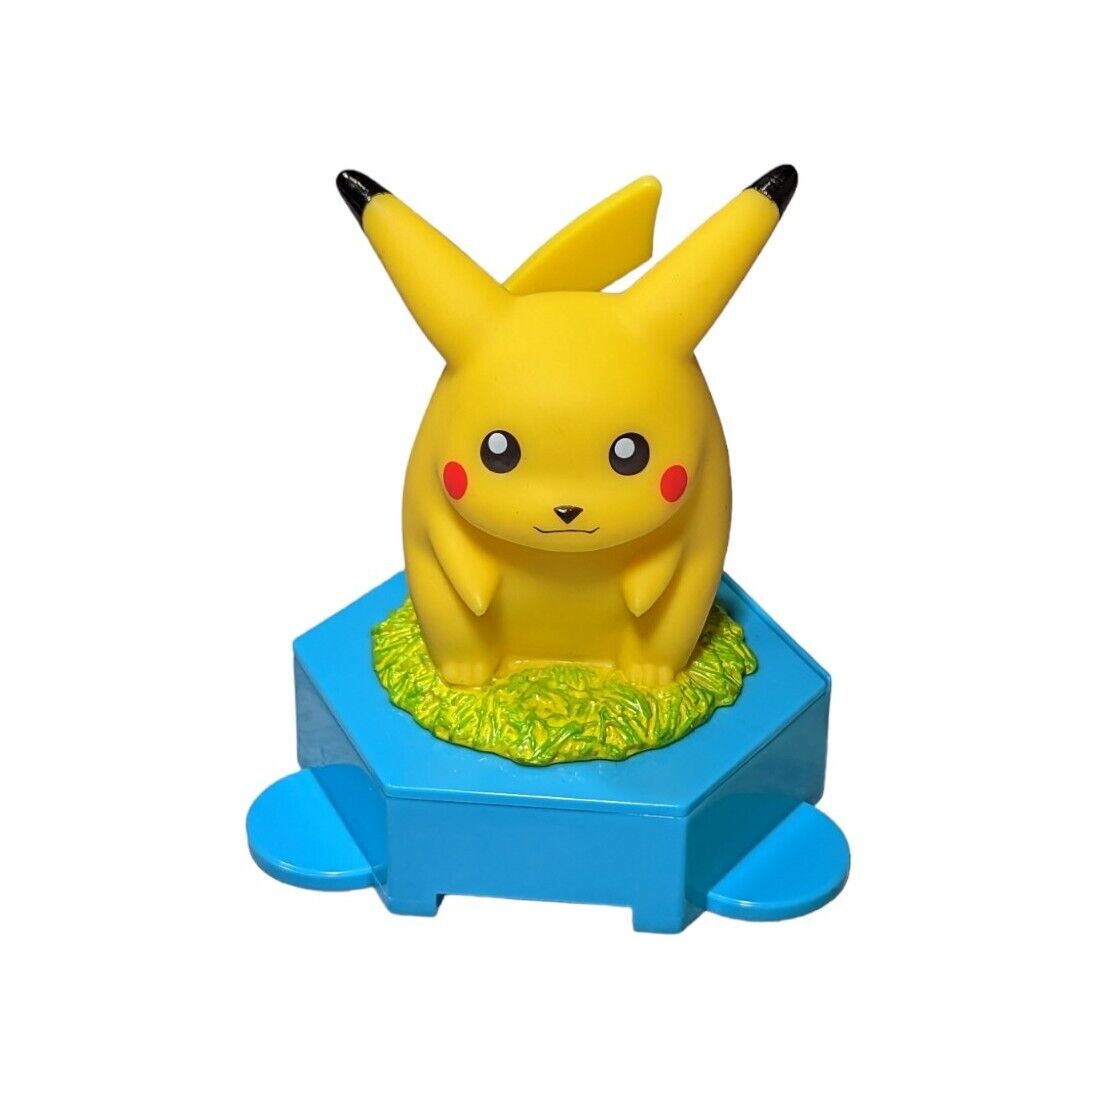 Vintage 1995 Applause Pokémon Pikachu Figure Piggy Bank 4.5”